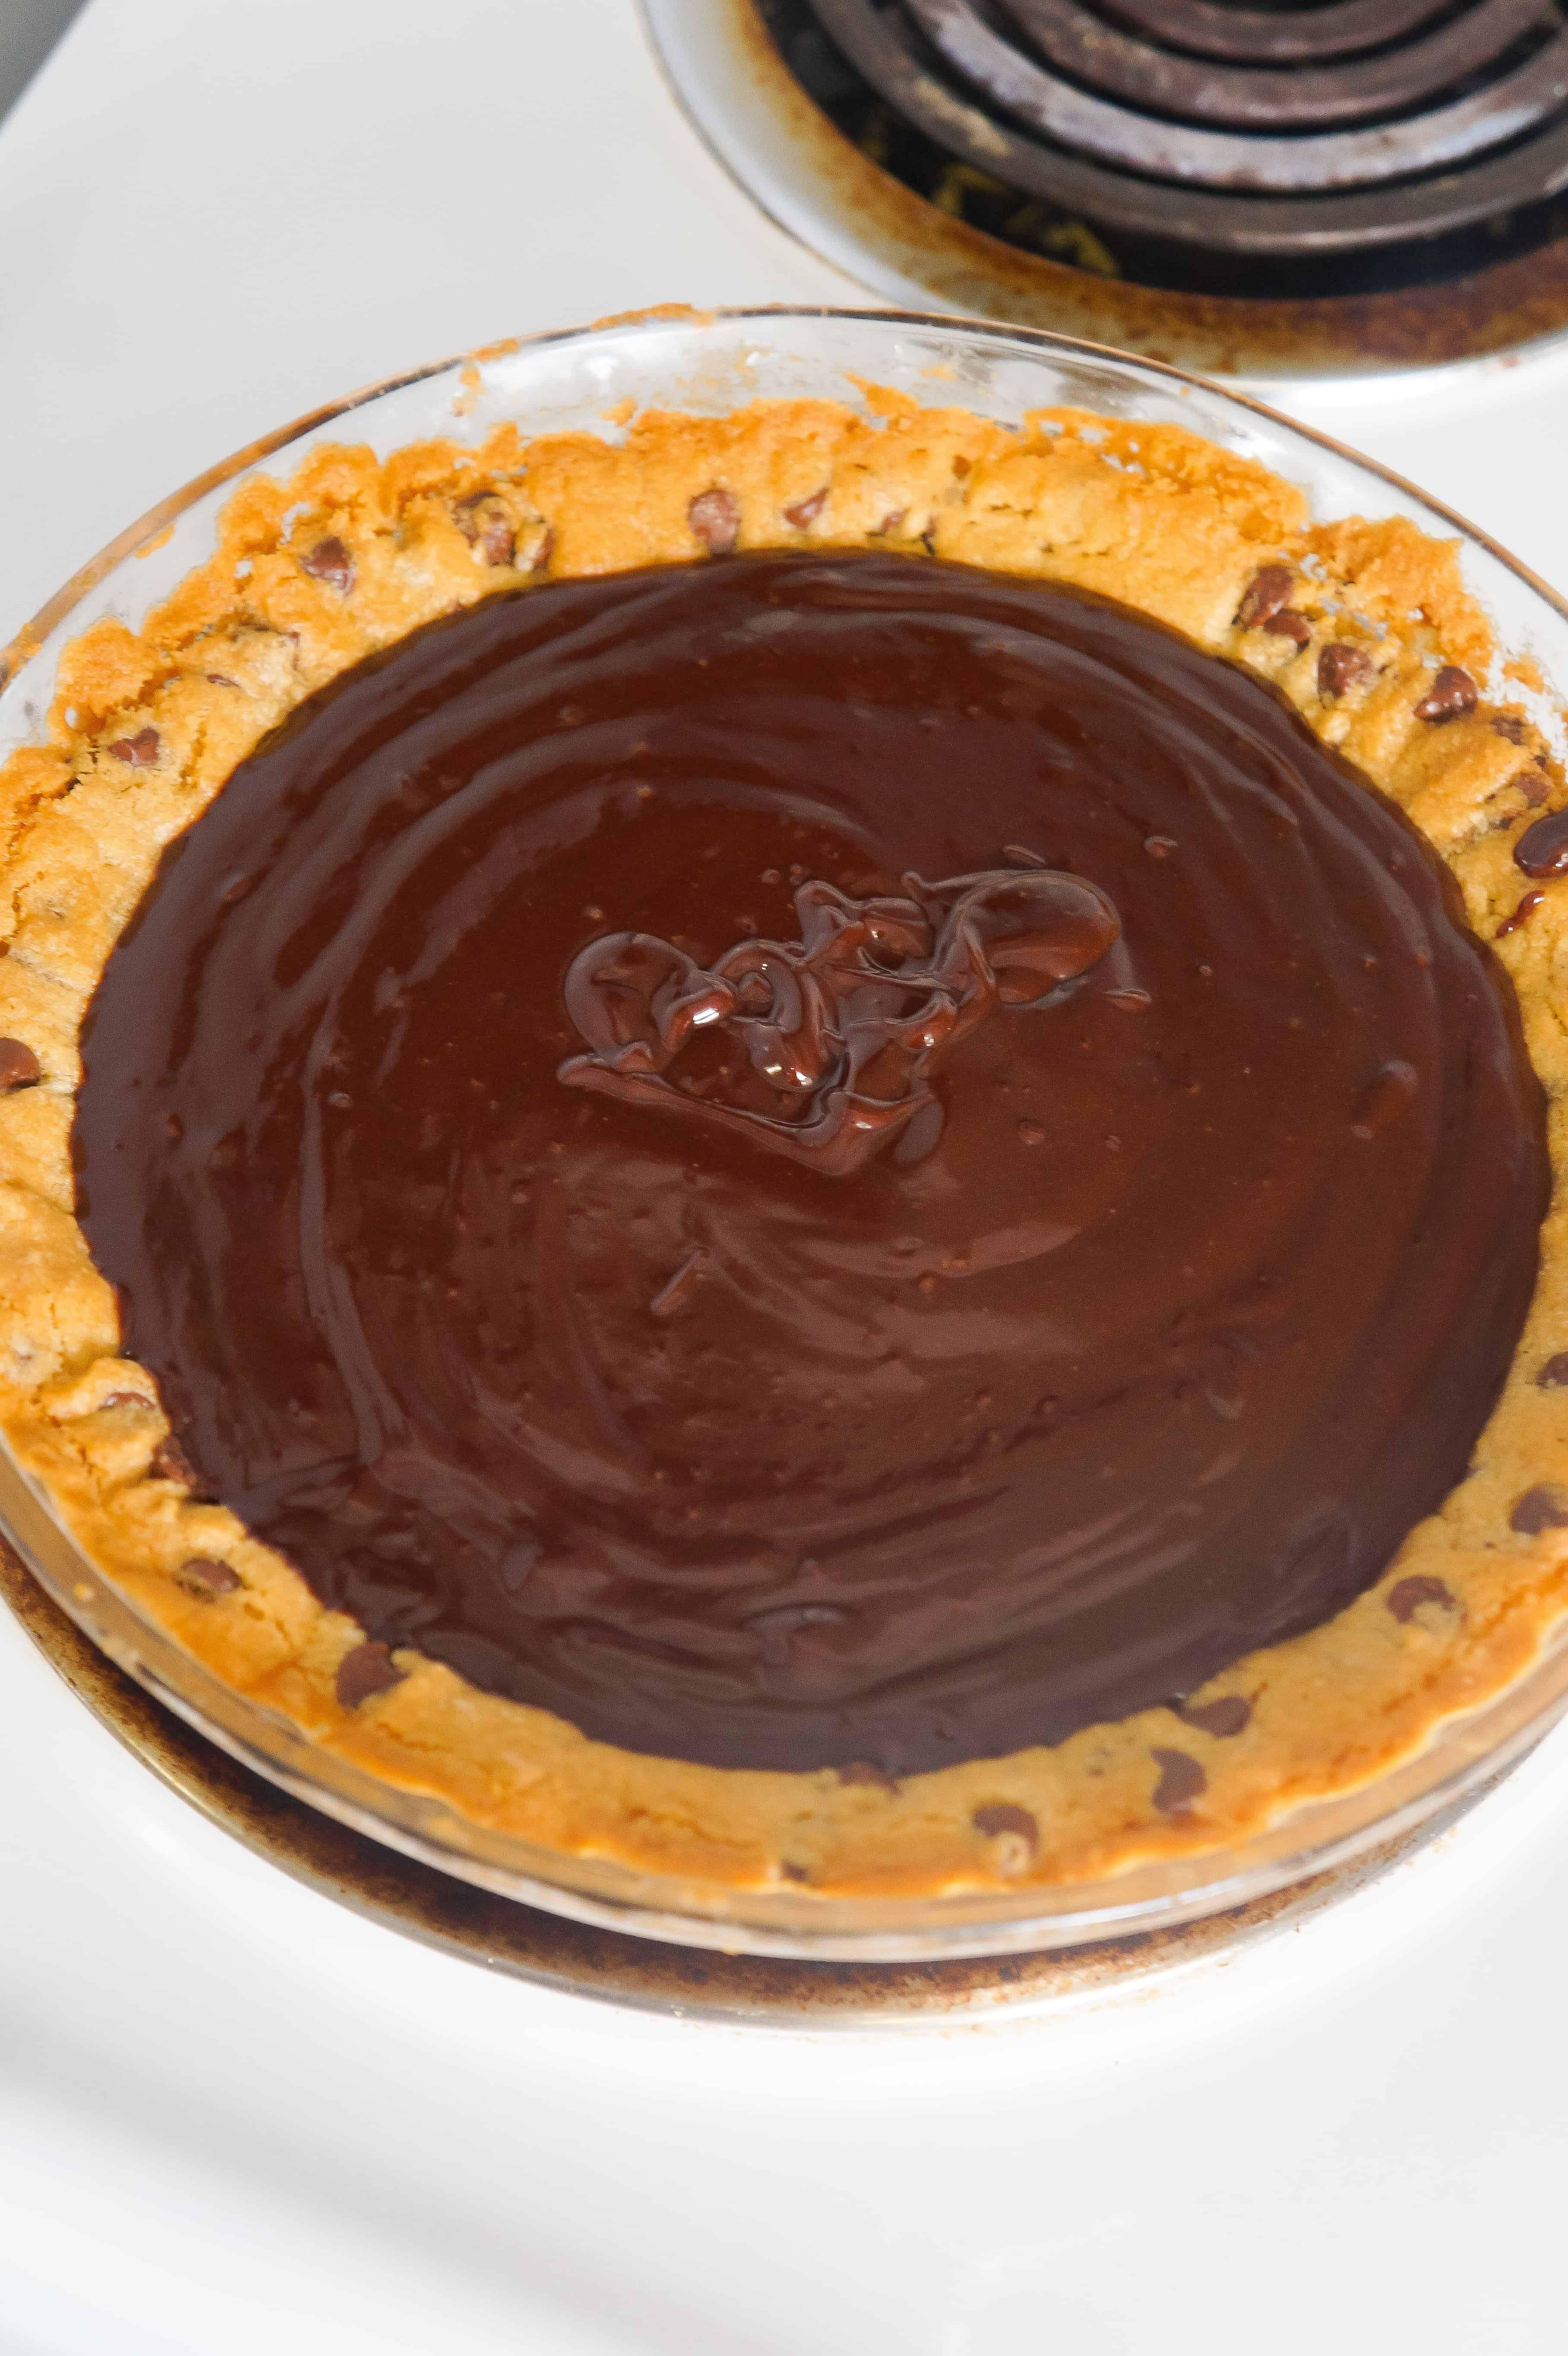 Creamy chocolate ganache in a chocolate chip cookie pie crust.